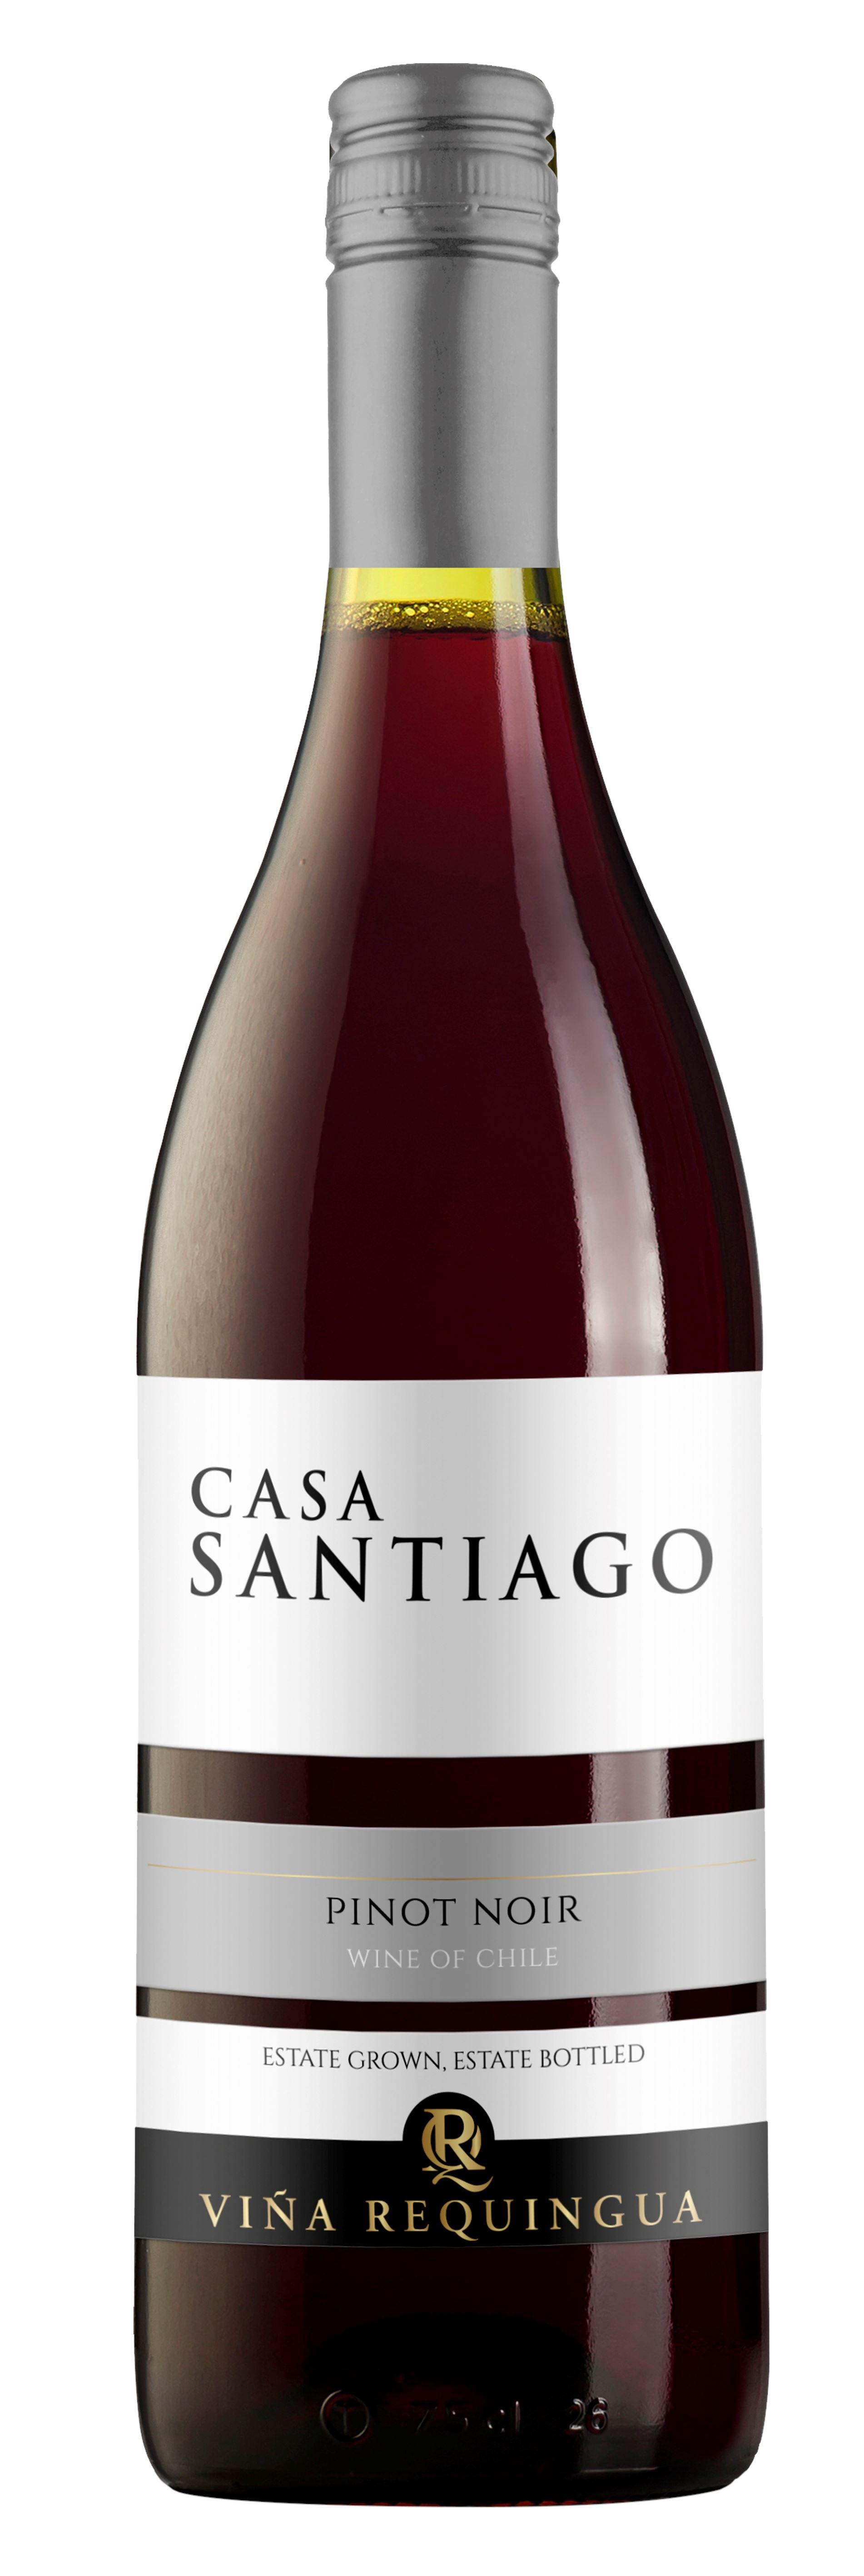 Casa Santiago, Pinot Noir, Chile Wine Bottle Condor Wines 